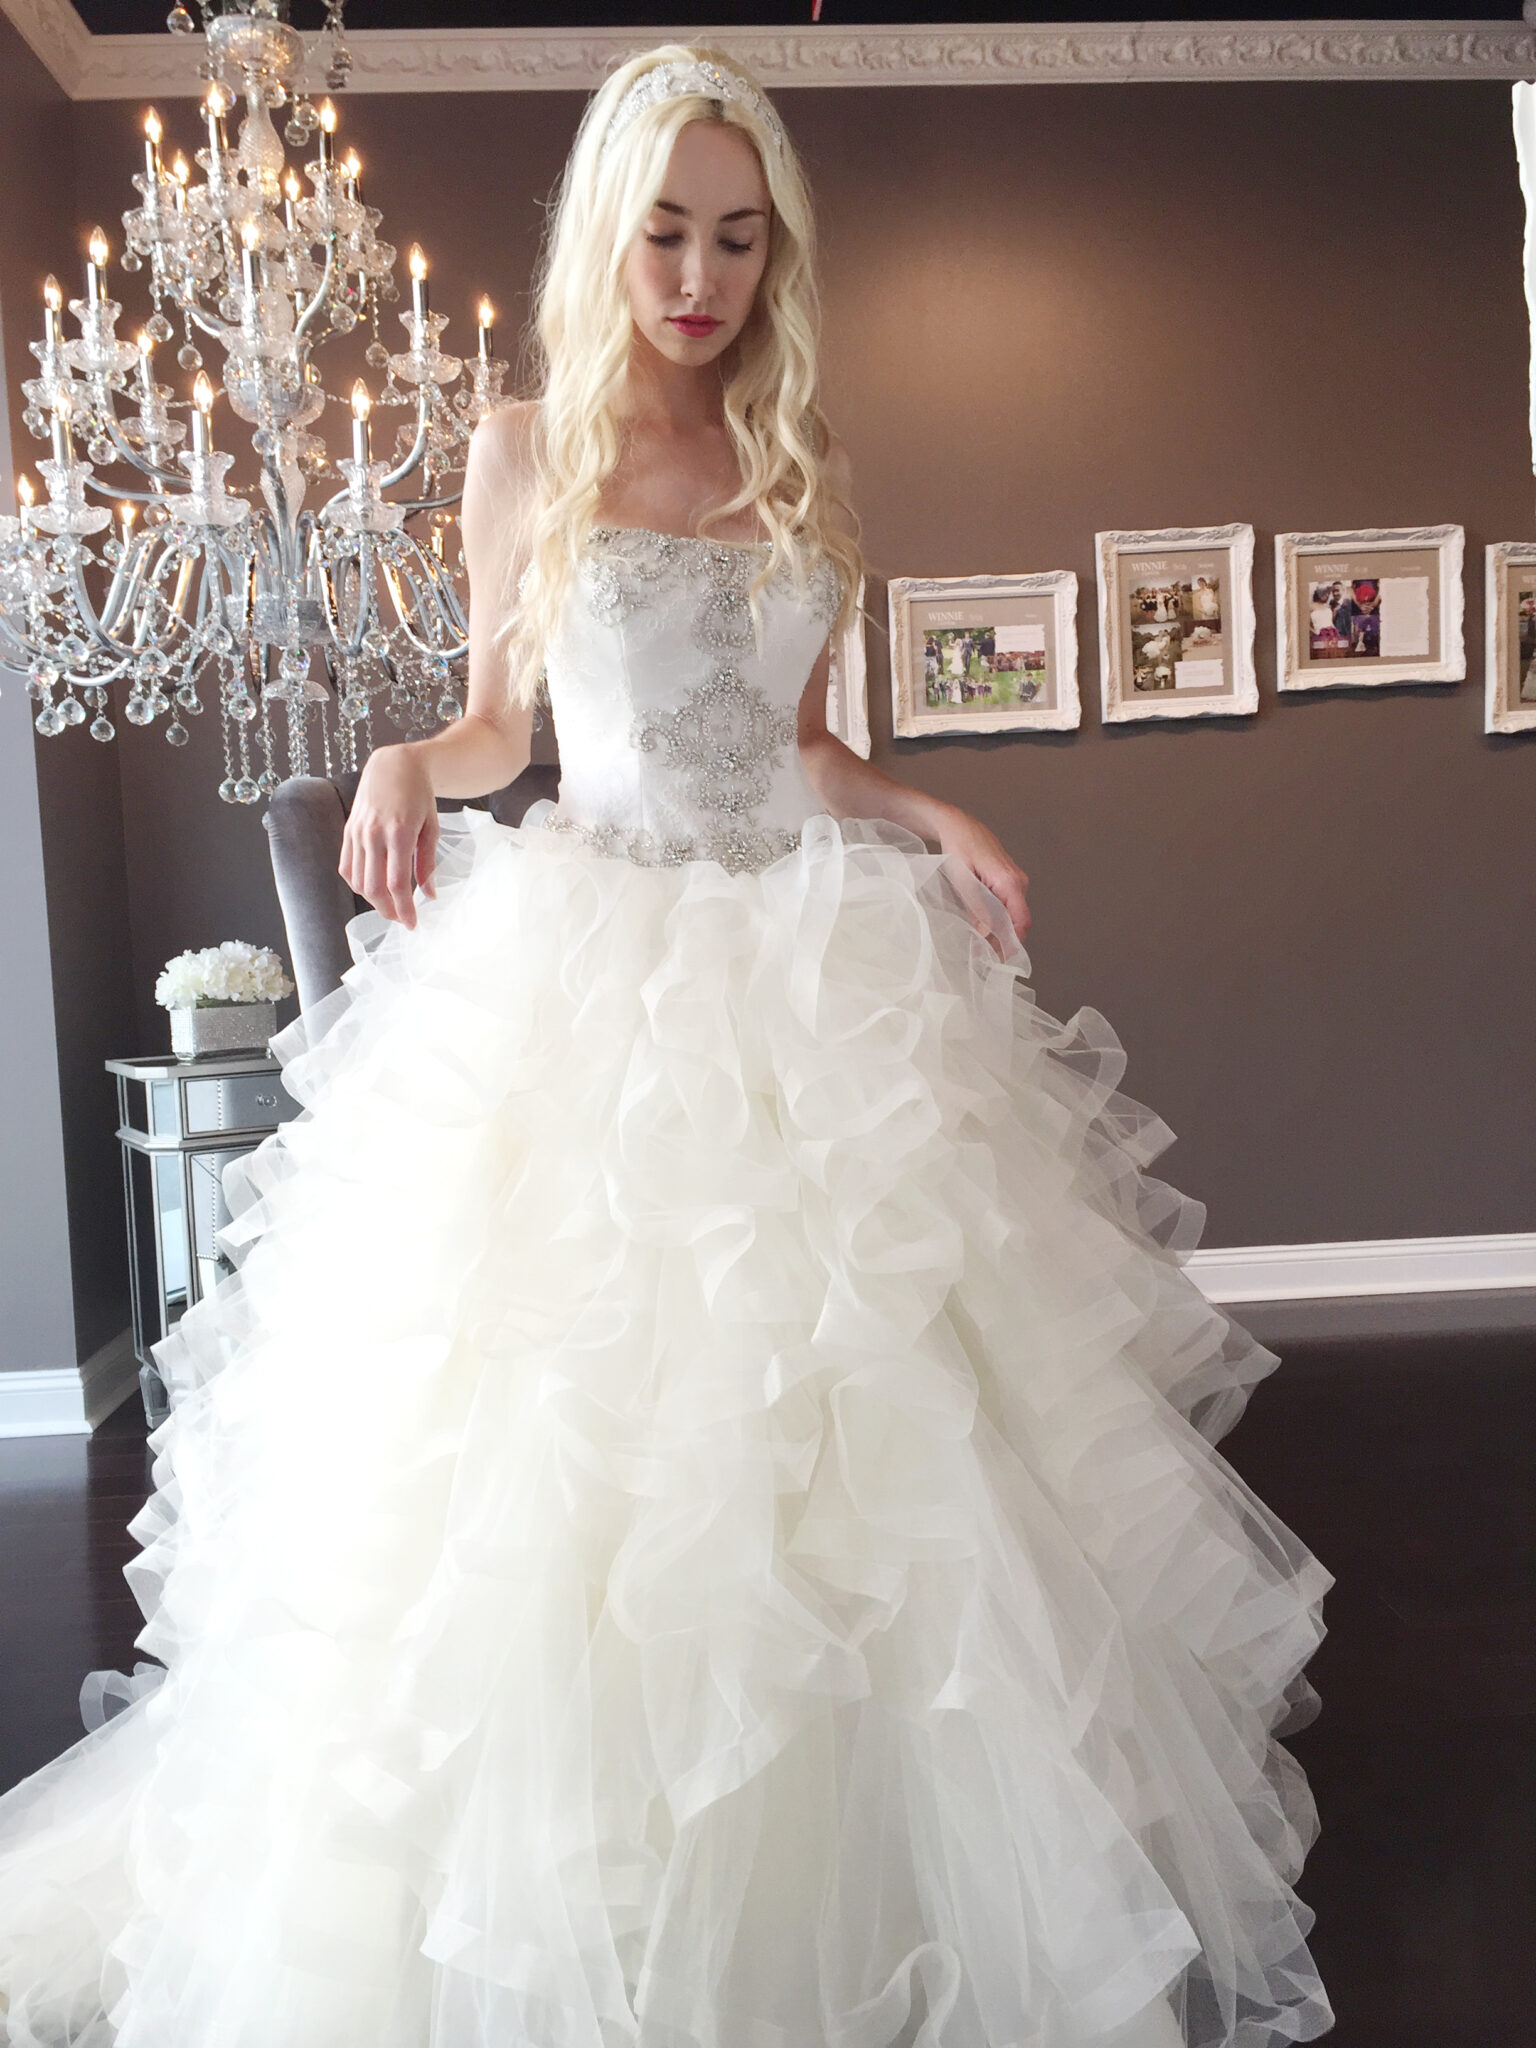  Bridal  Gowns  Wedding  Dresses  Frisco TX  Winnie Couture